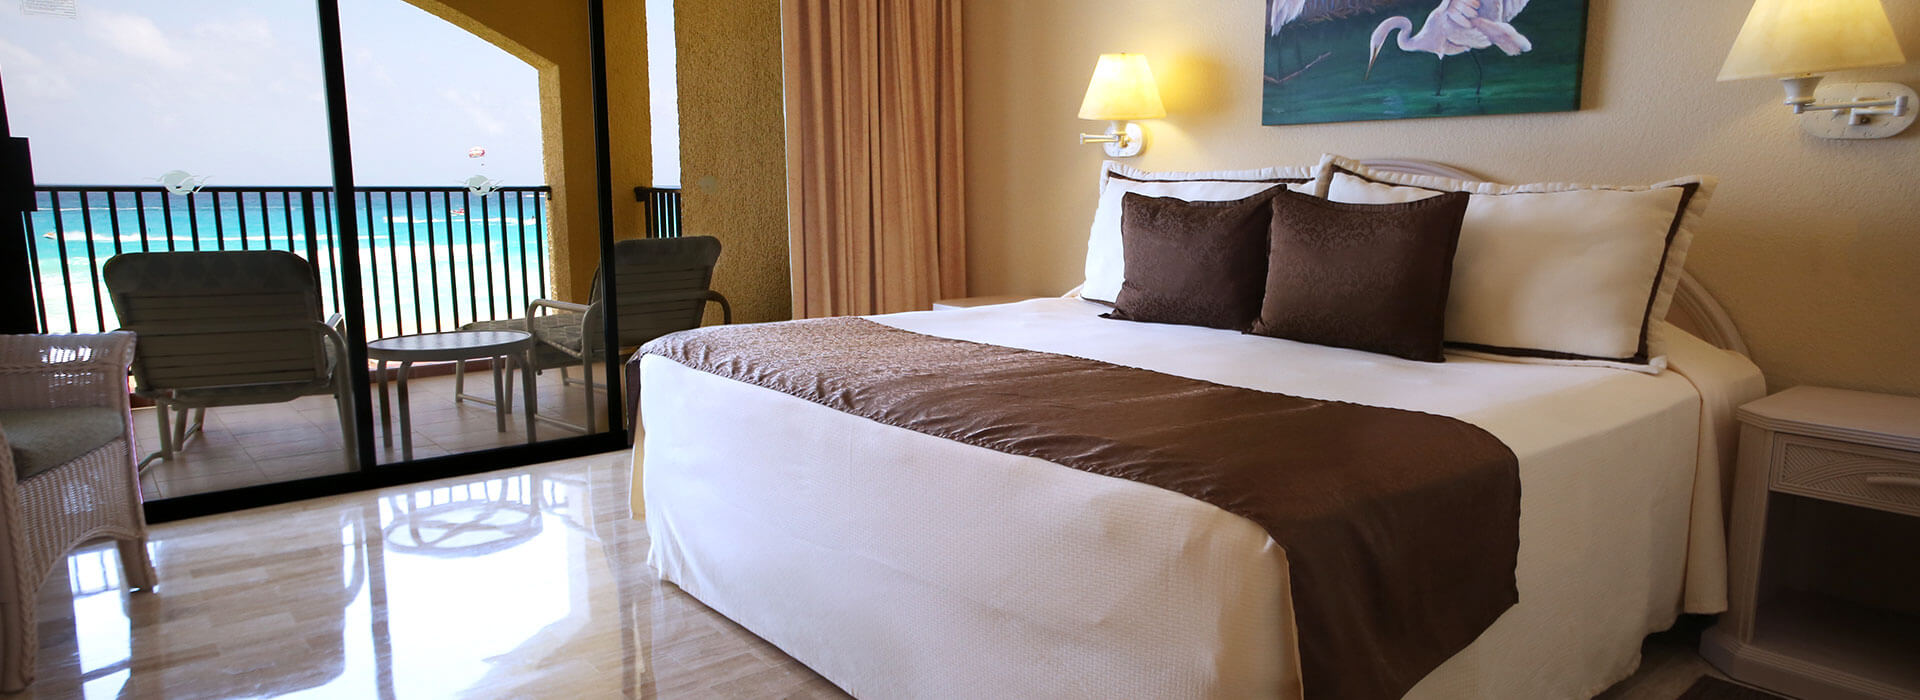 habitación en Cancún con cama king size